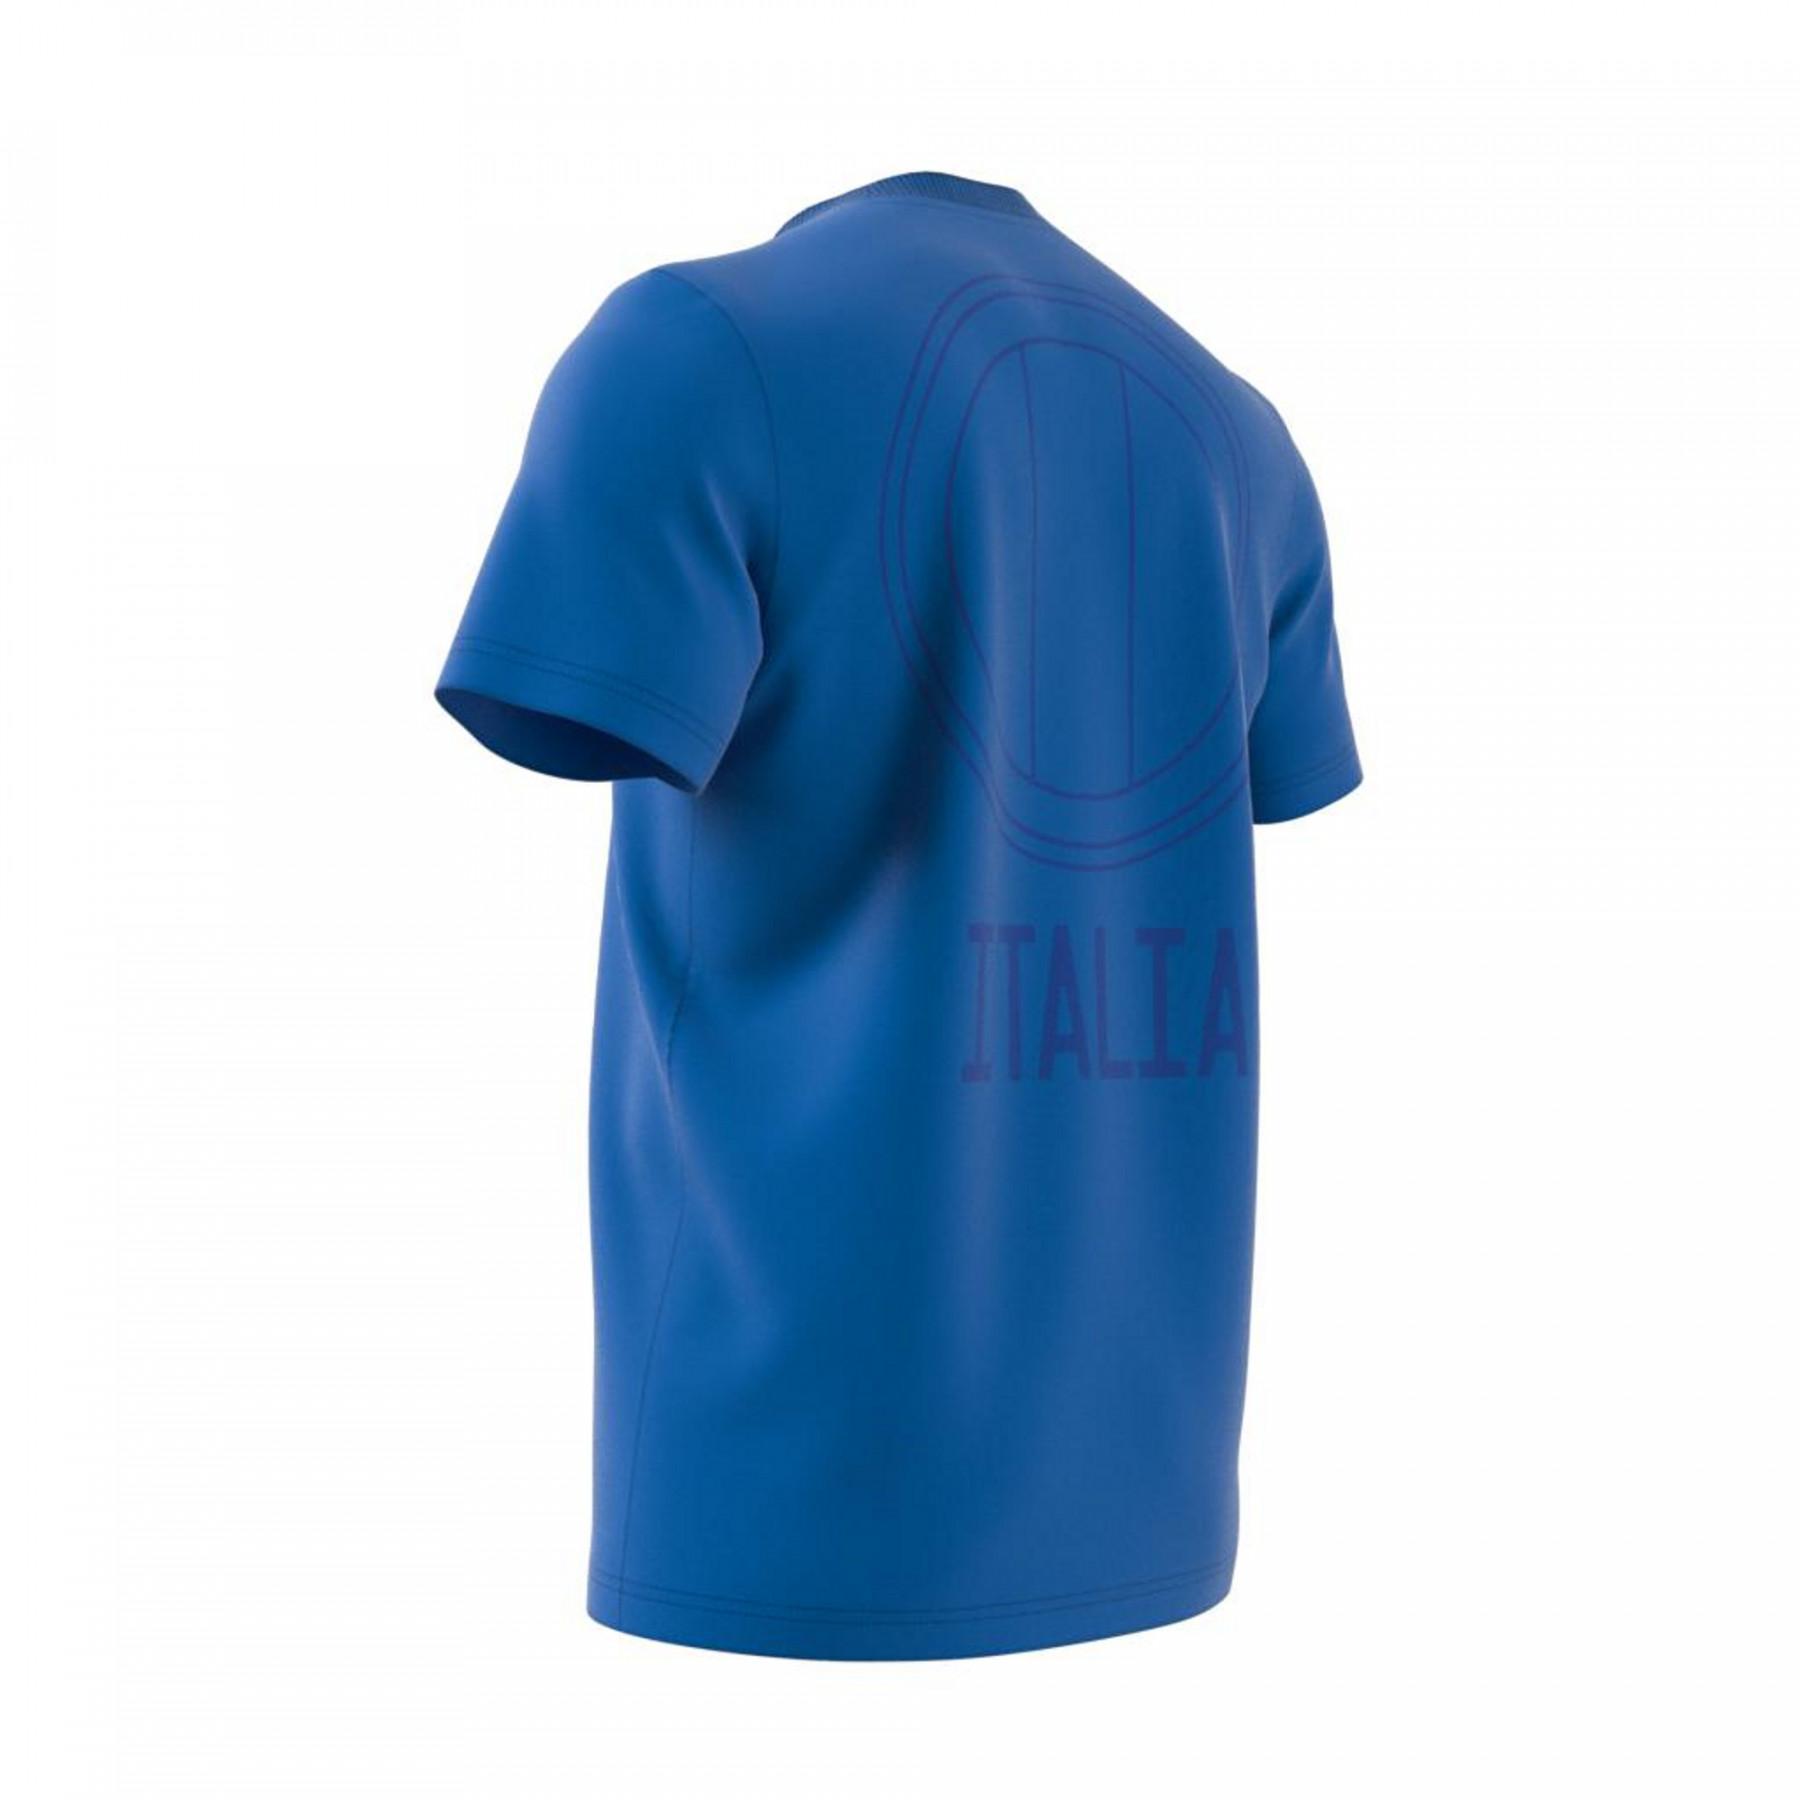 Camiseta adidas Italie Fan Euro 2020